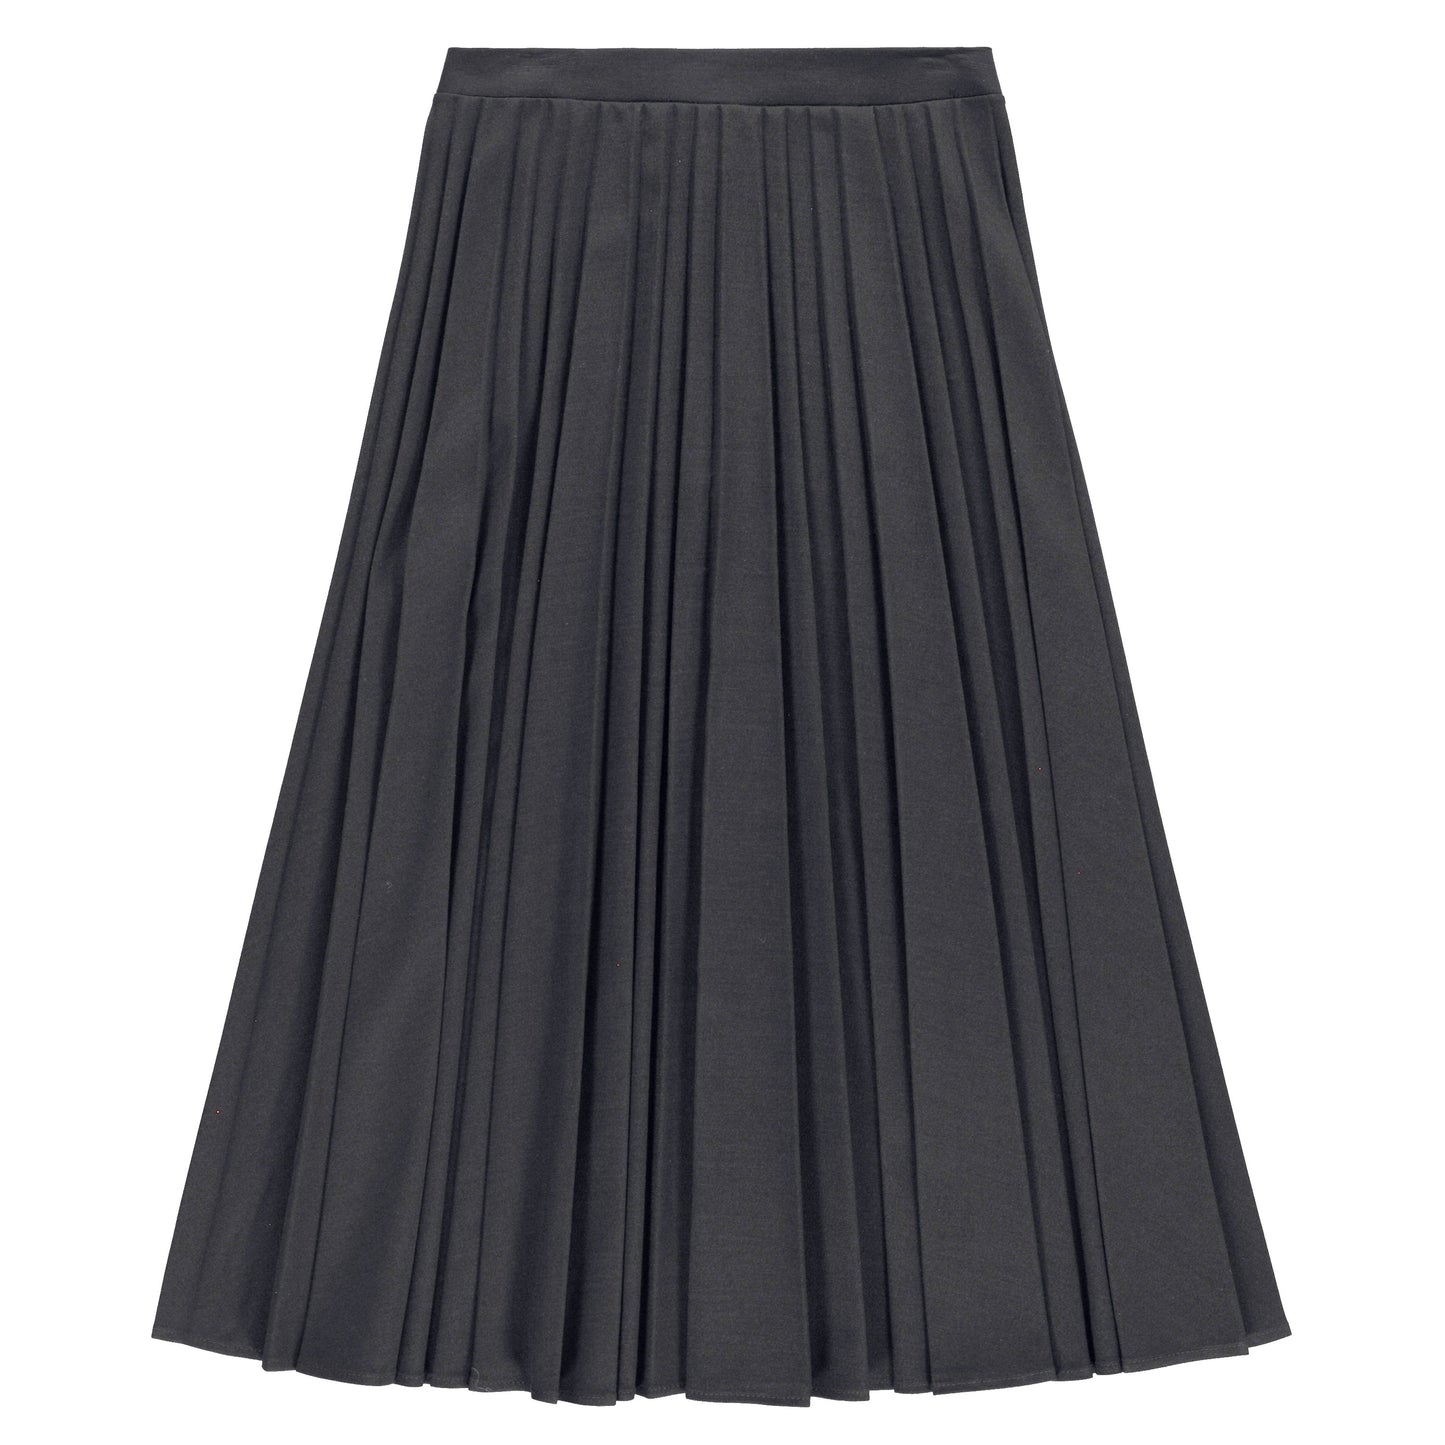 Chavy Elastic Waist Combo Pleated Skirt